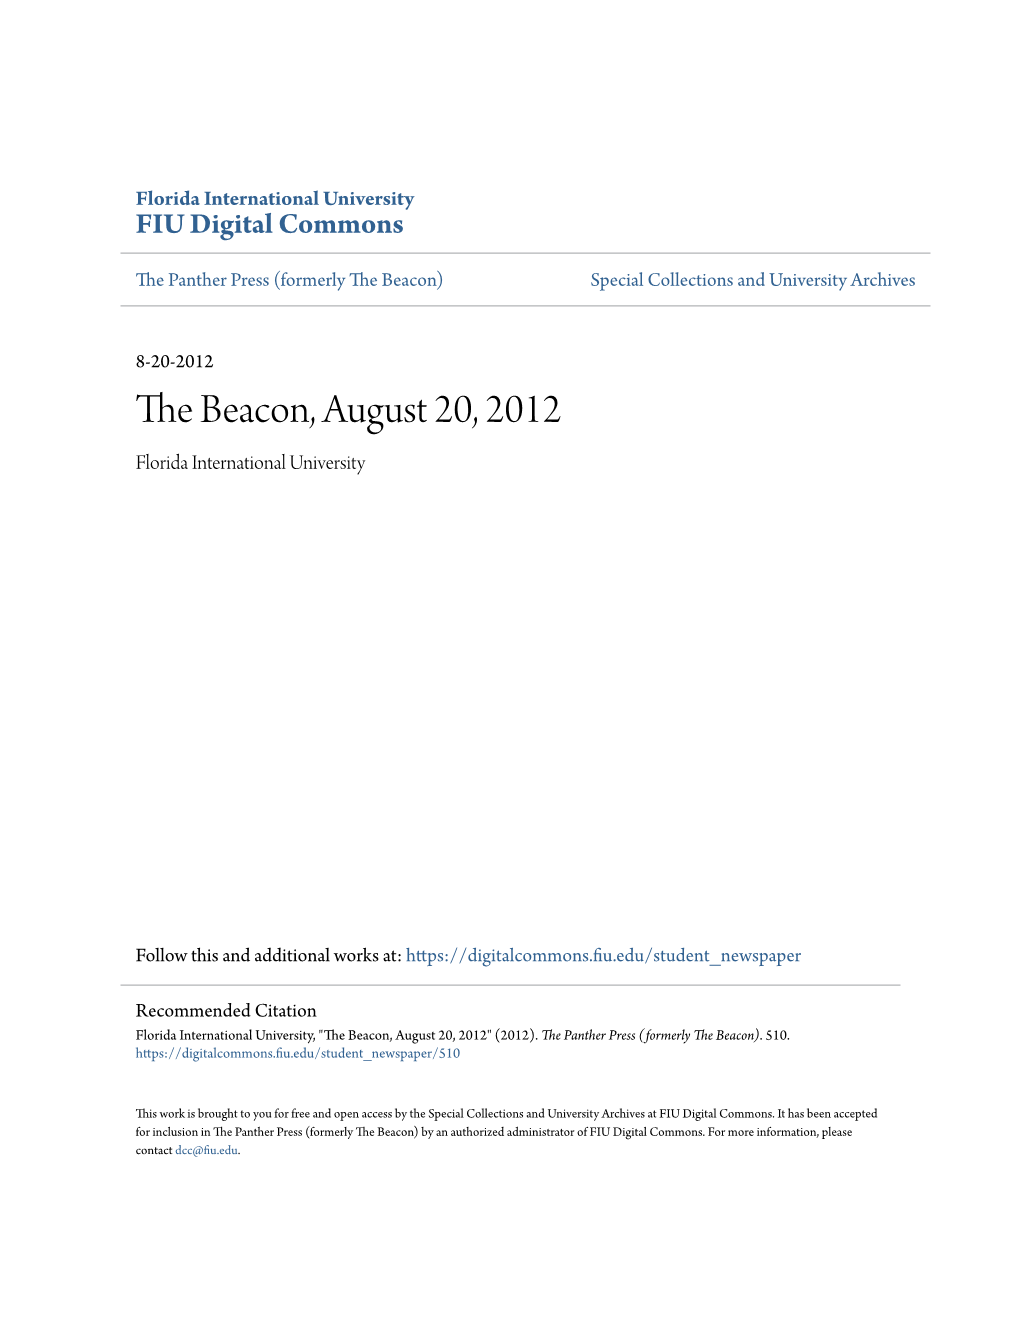 The Beacon, August 20, 2012 Florida International University